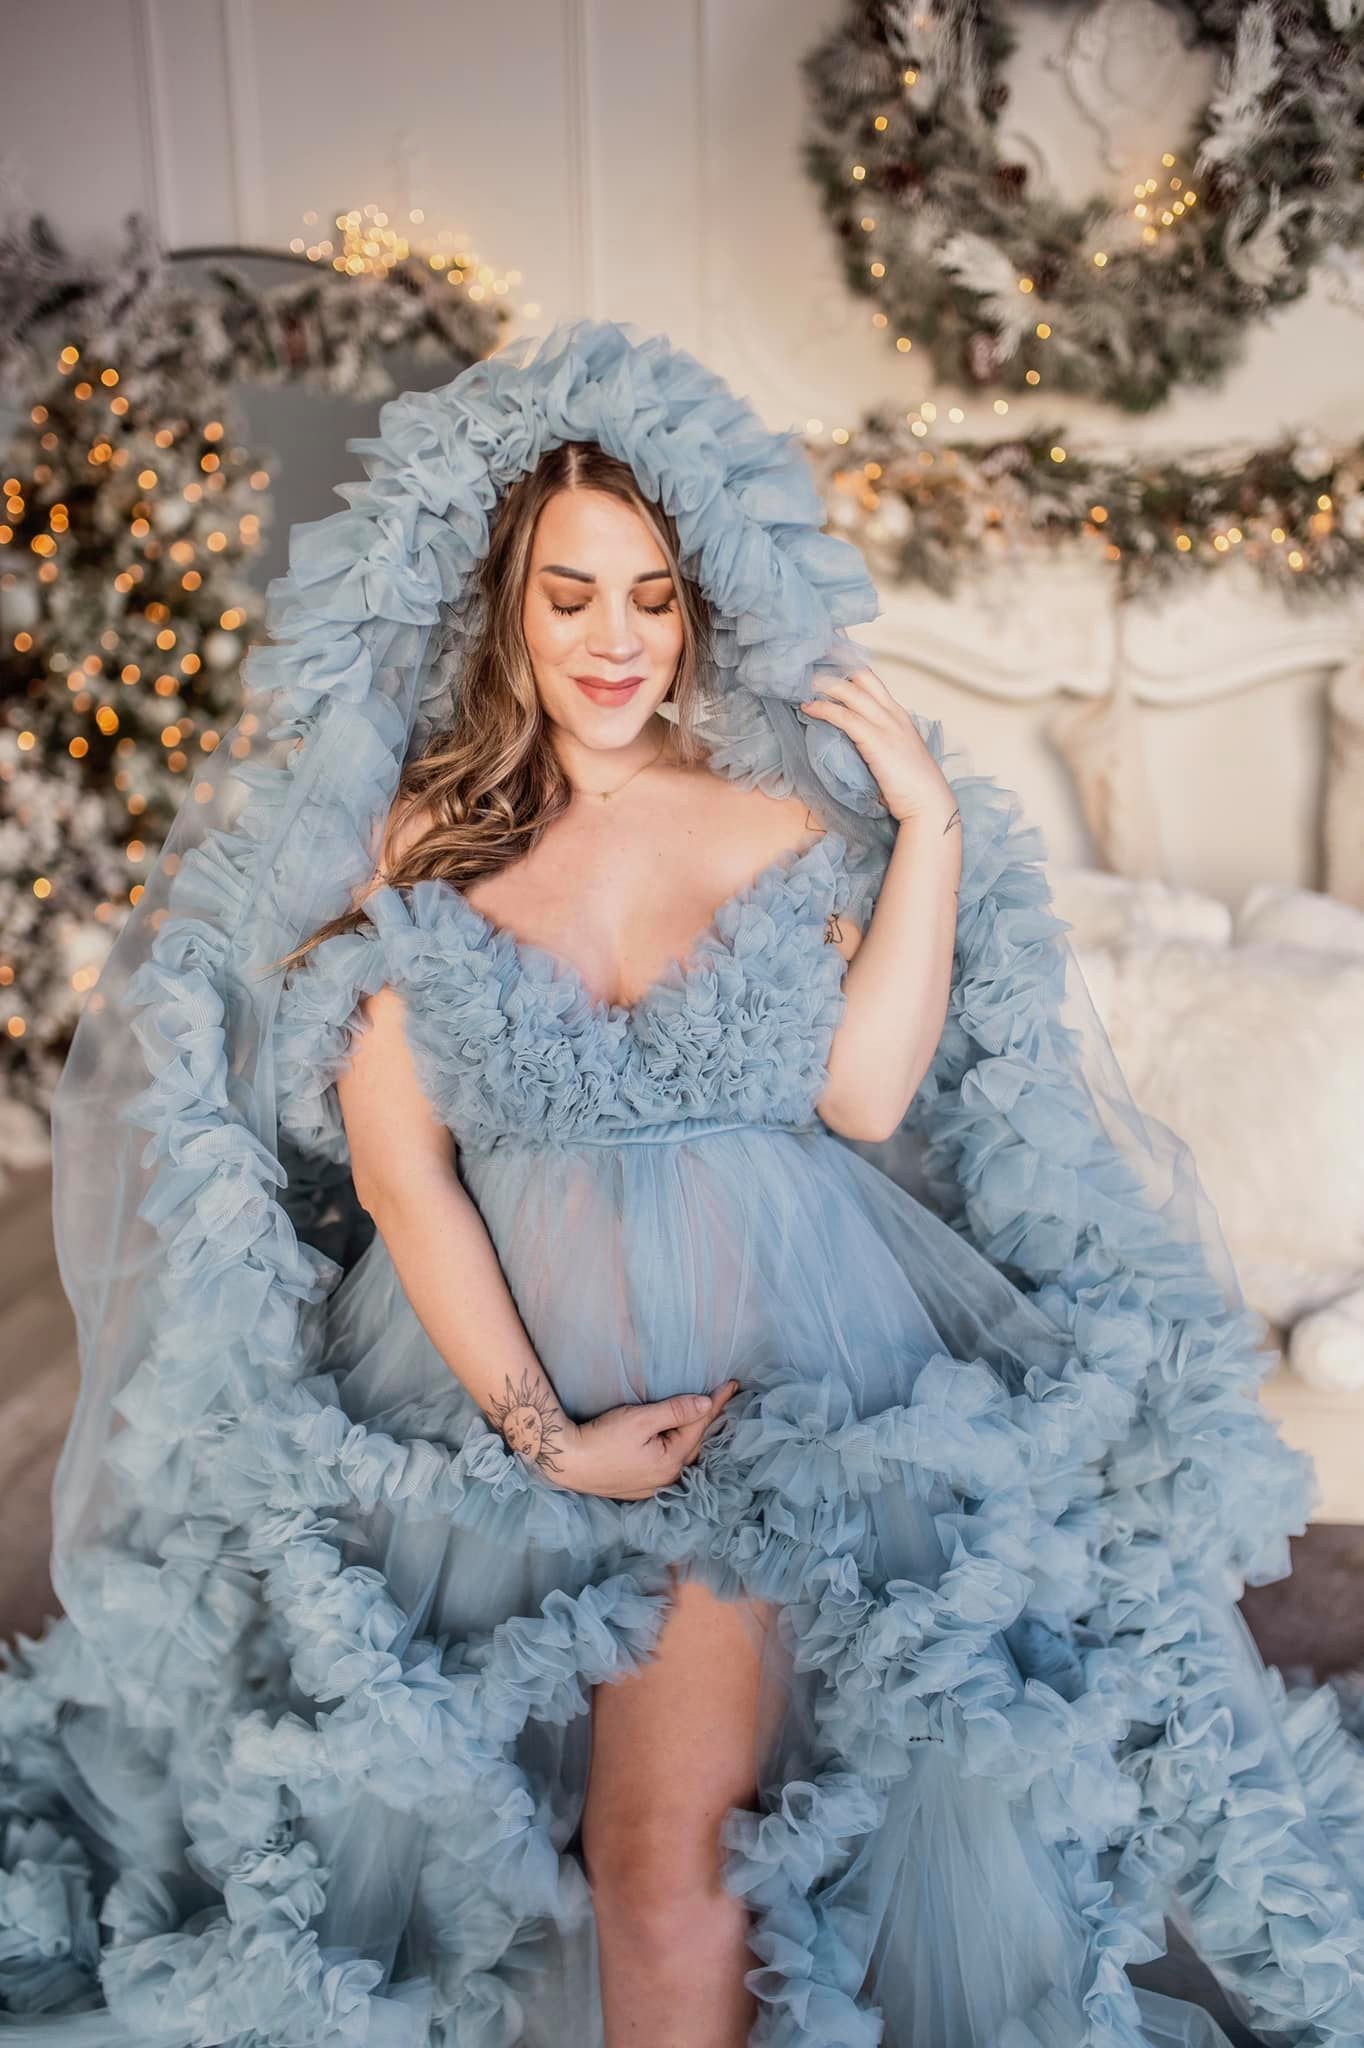 Baby Blue Dreamy Dress - maternity photoshoot dress